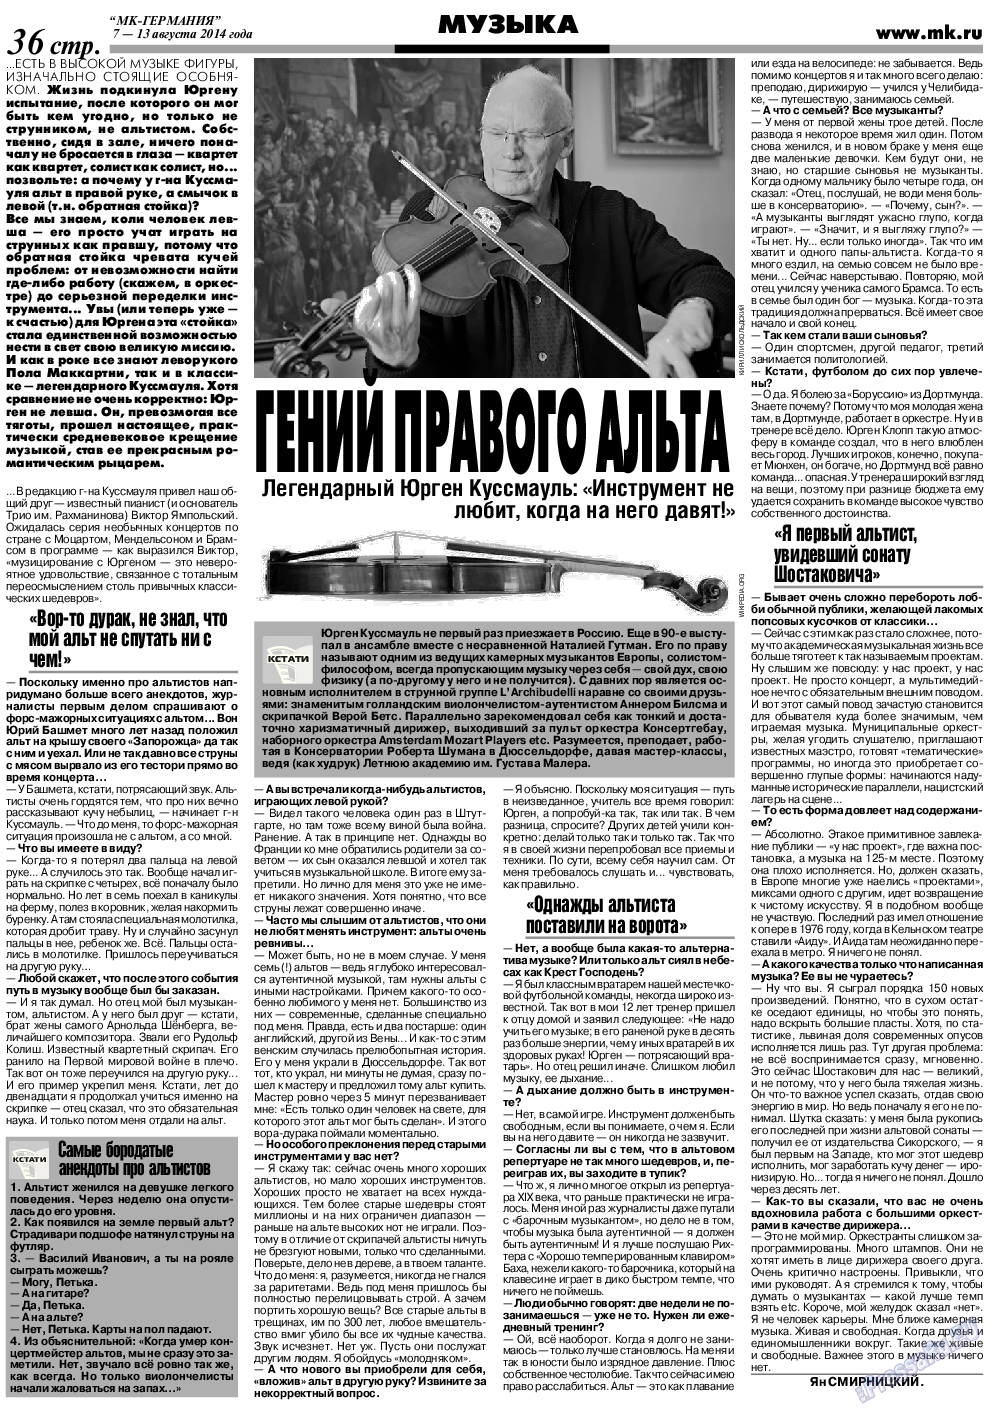 МК-Германия, газета. 2014 №32 стр.36